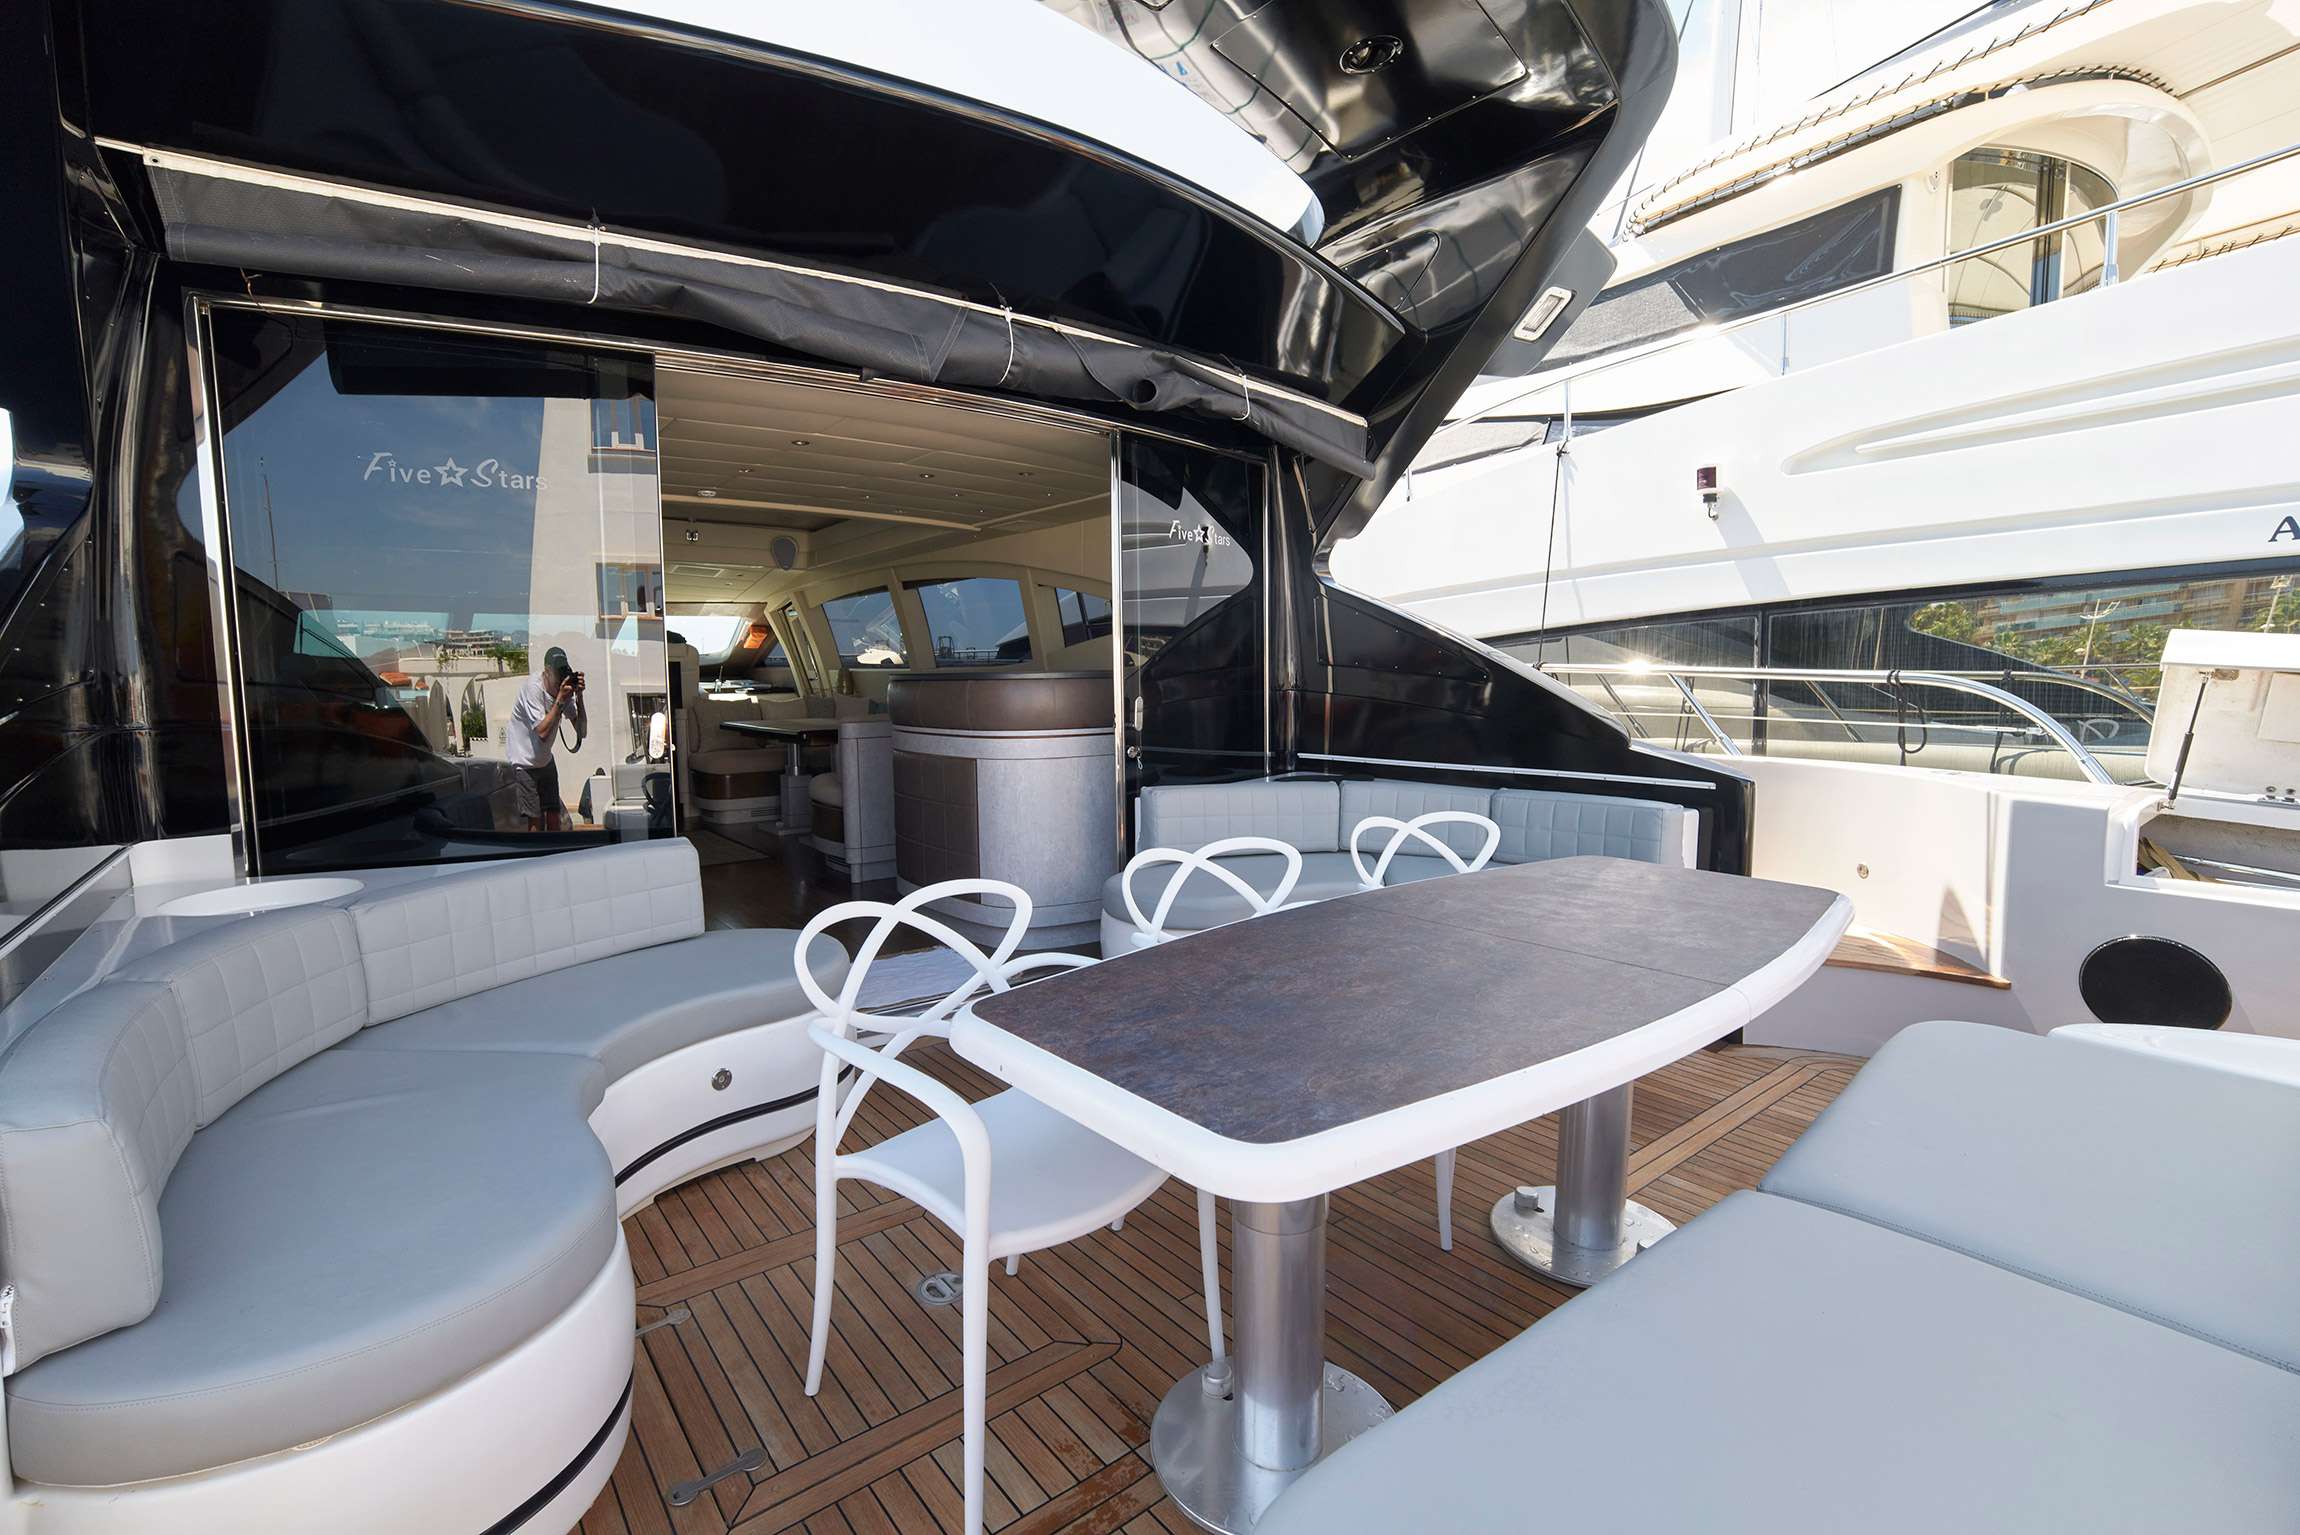 FIVE STARS - Yacht Charter Portocolom & Boat hire in Balearics & Spain 3